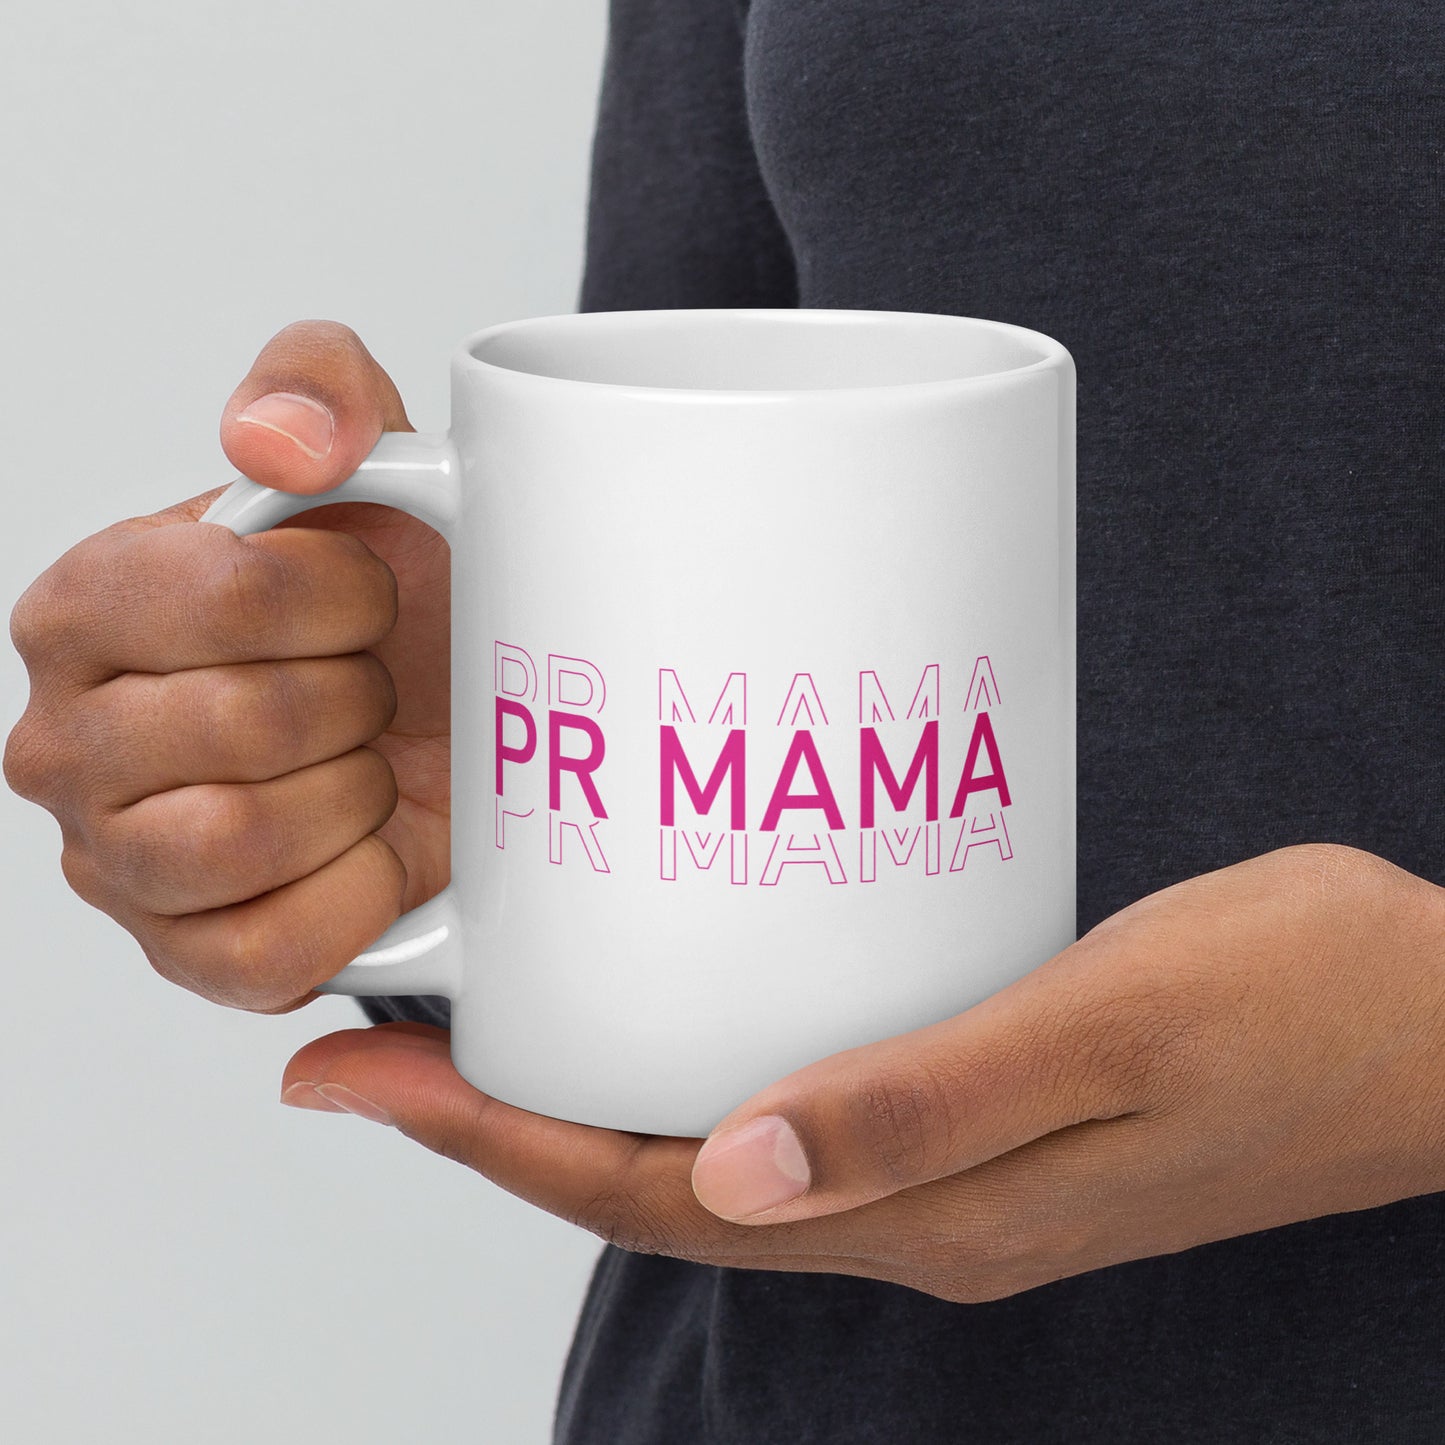 PR MAMA Printed White glossy mug